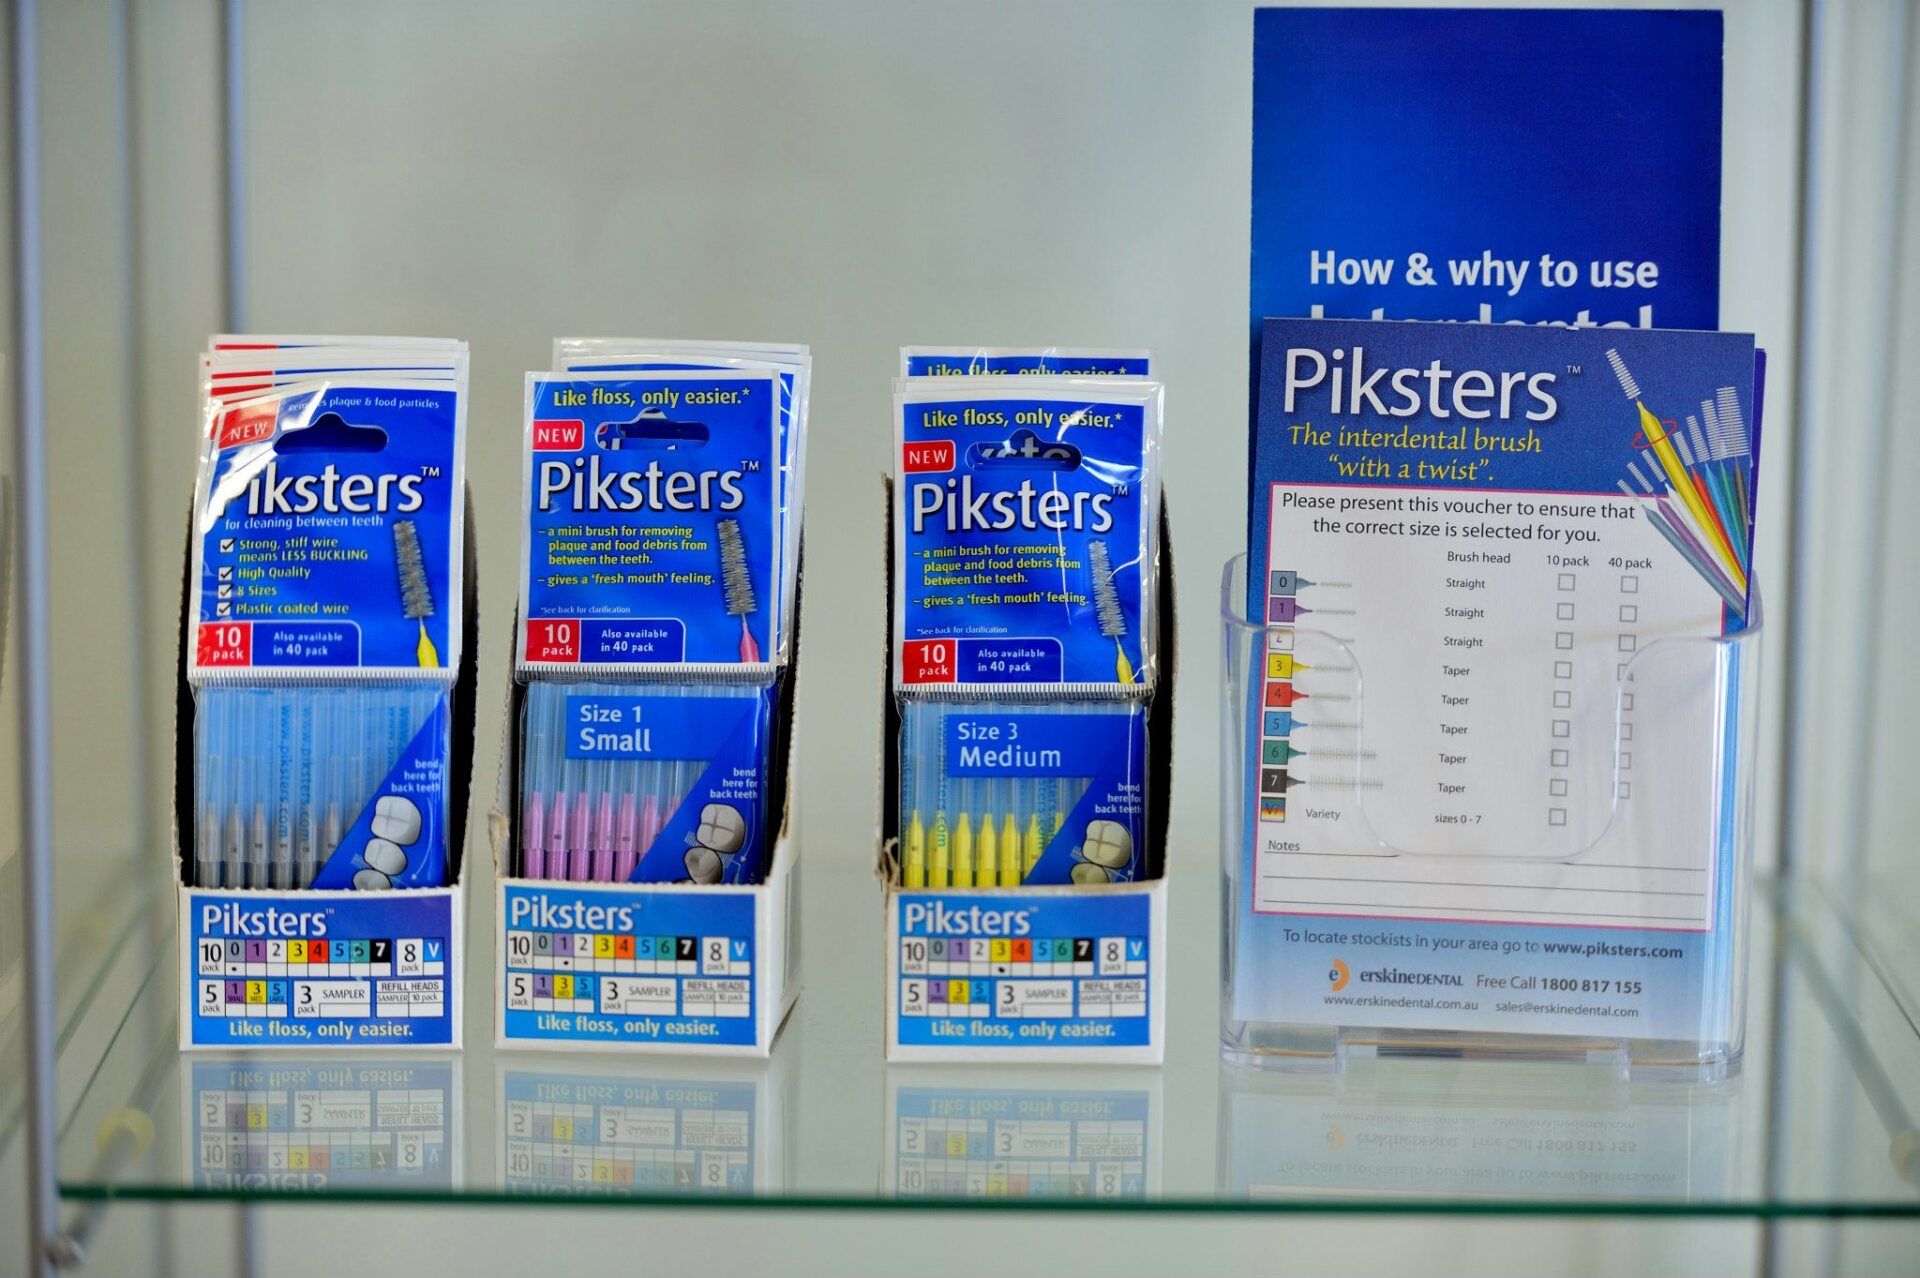 Piksters — Morningside, QLD — Morningside 621 Dental Surgery